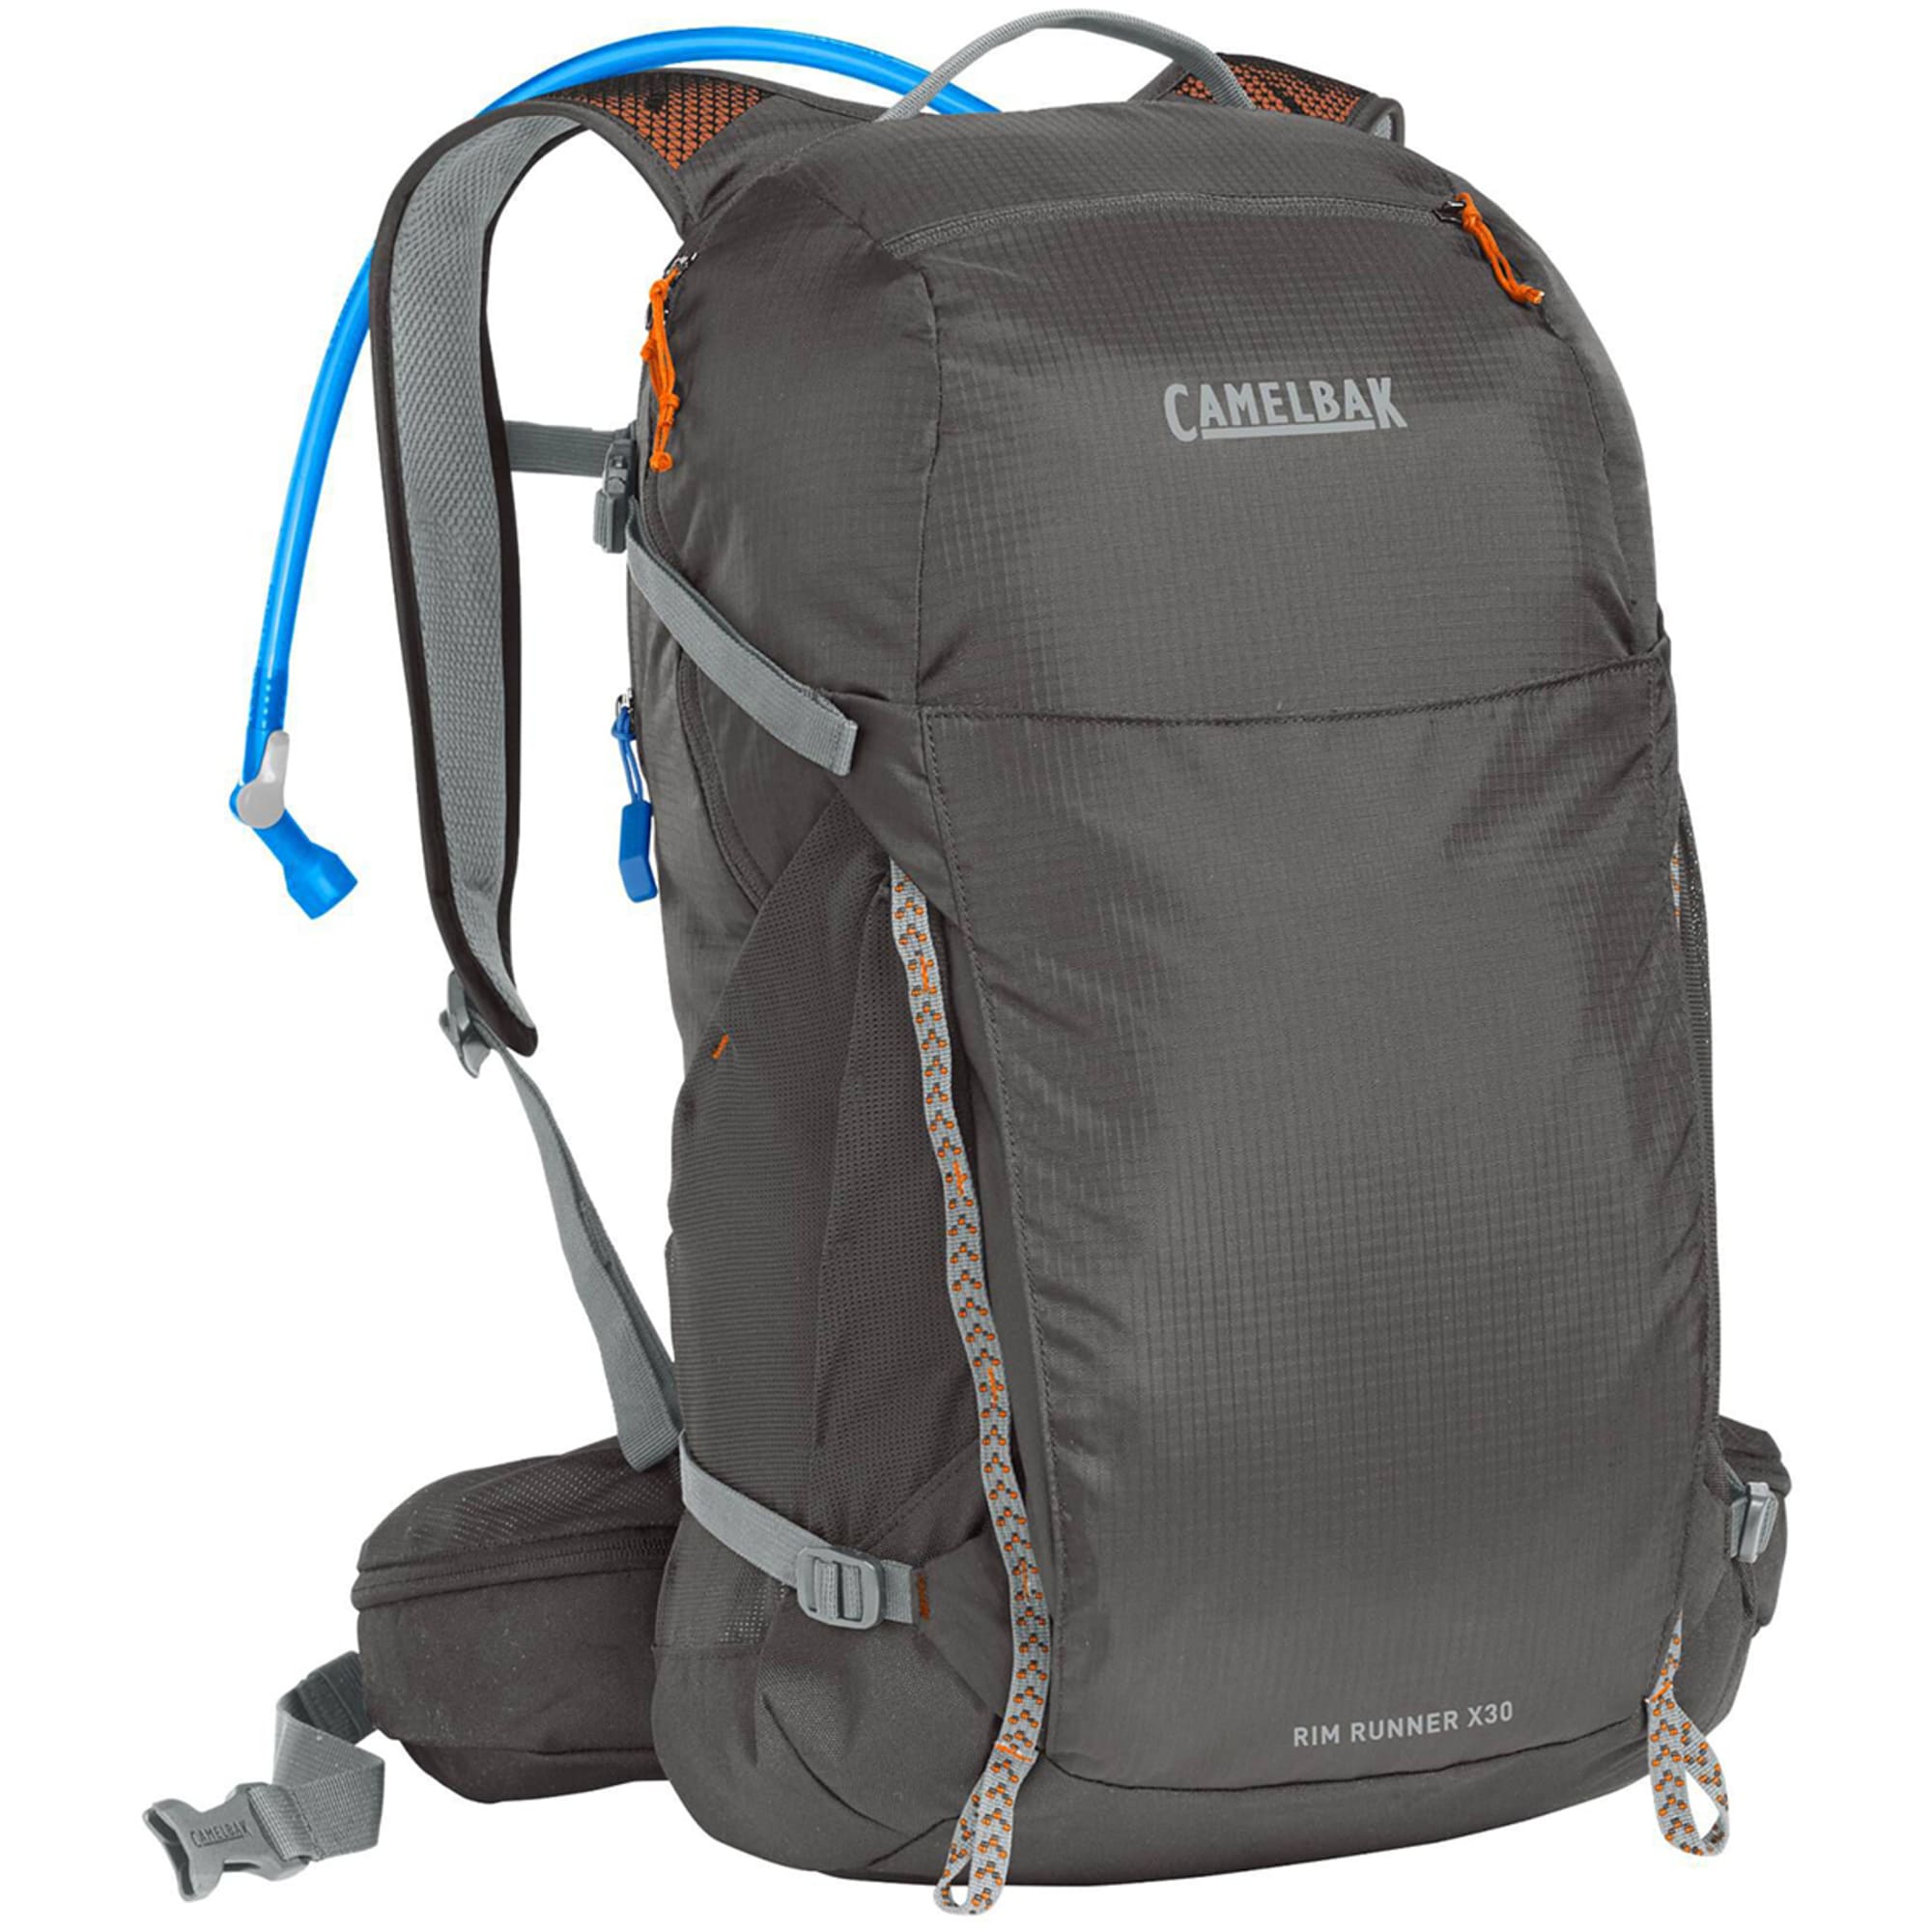 CAMELBAK Rim Runner X30 Hiking Hydration Pack w/ Crux 2L Reservoir 